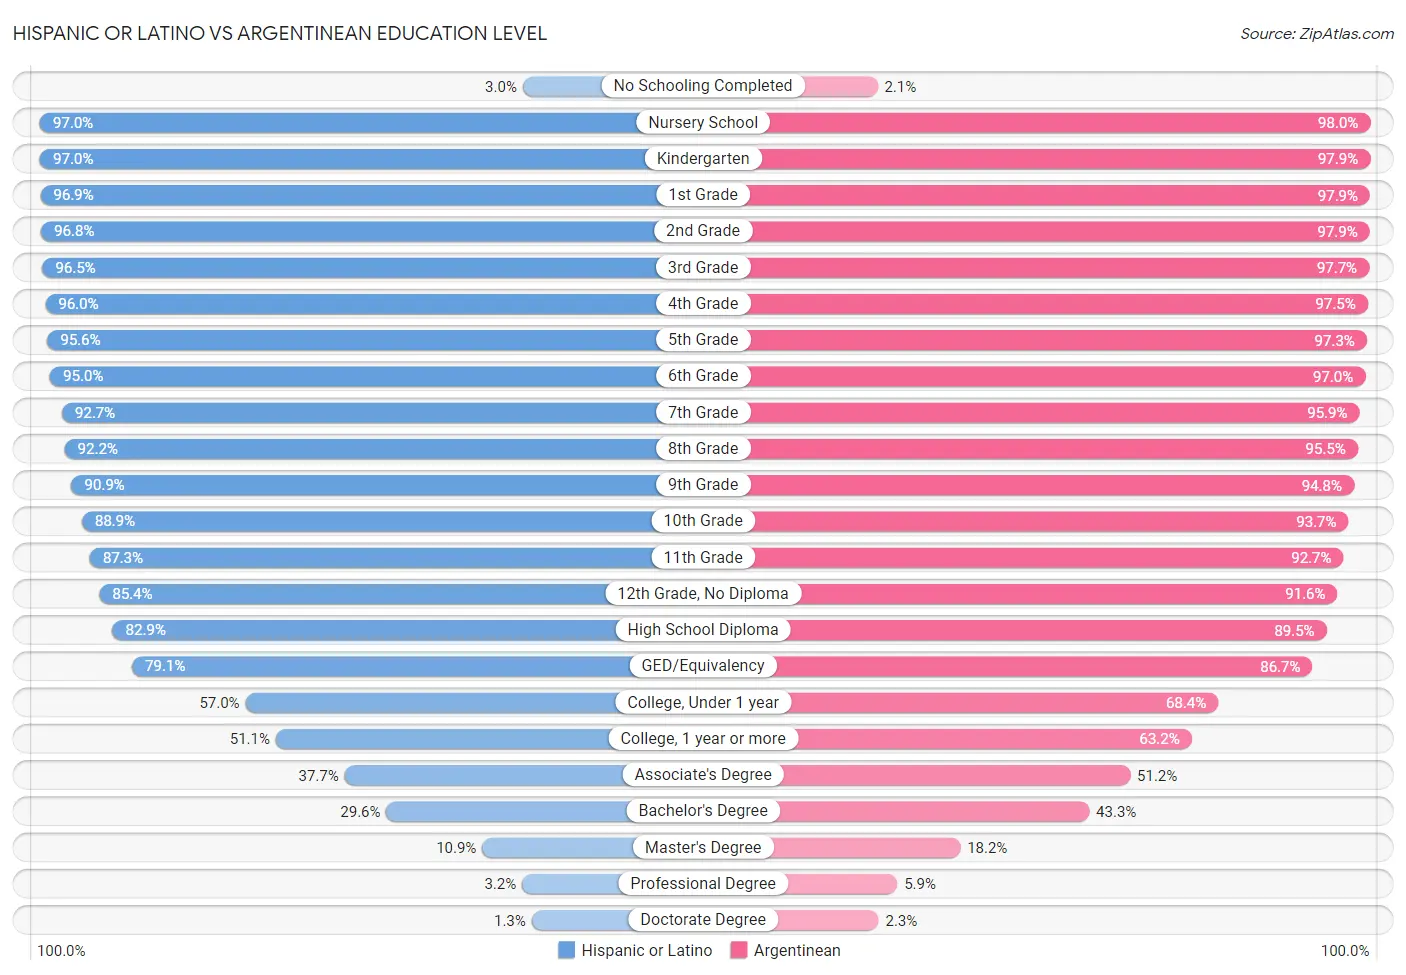 Hispanic or Latino vs Argentinean Education Level